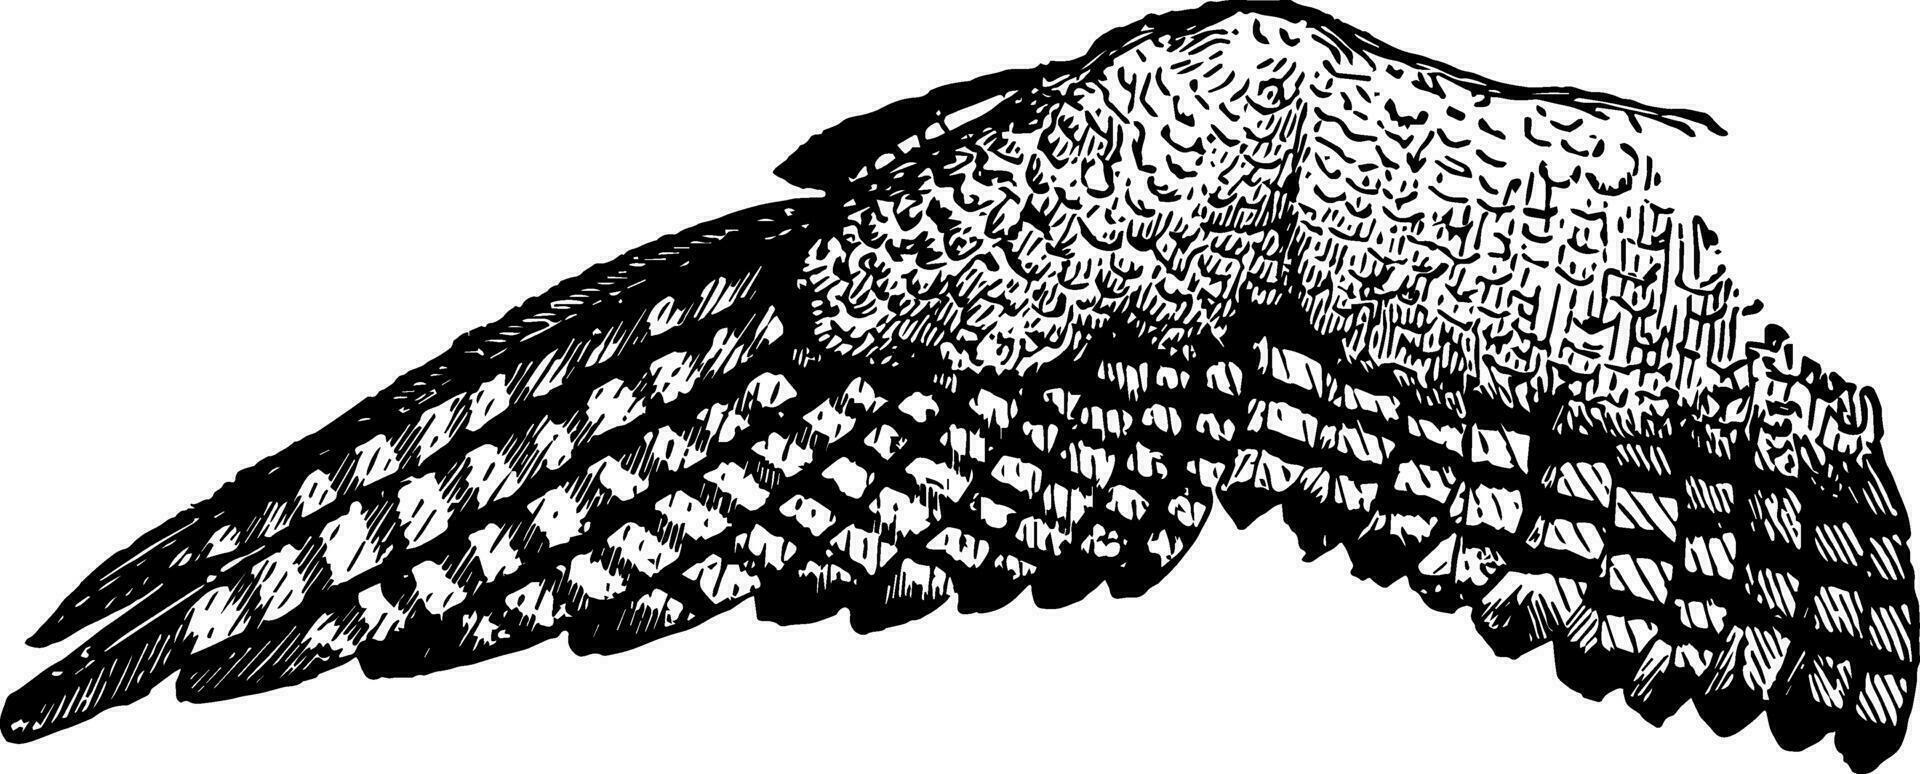 Wing of an Eagle, vintage illustration. vector